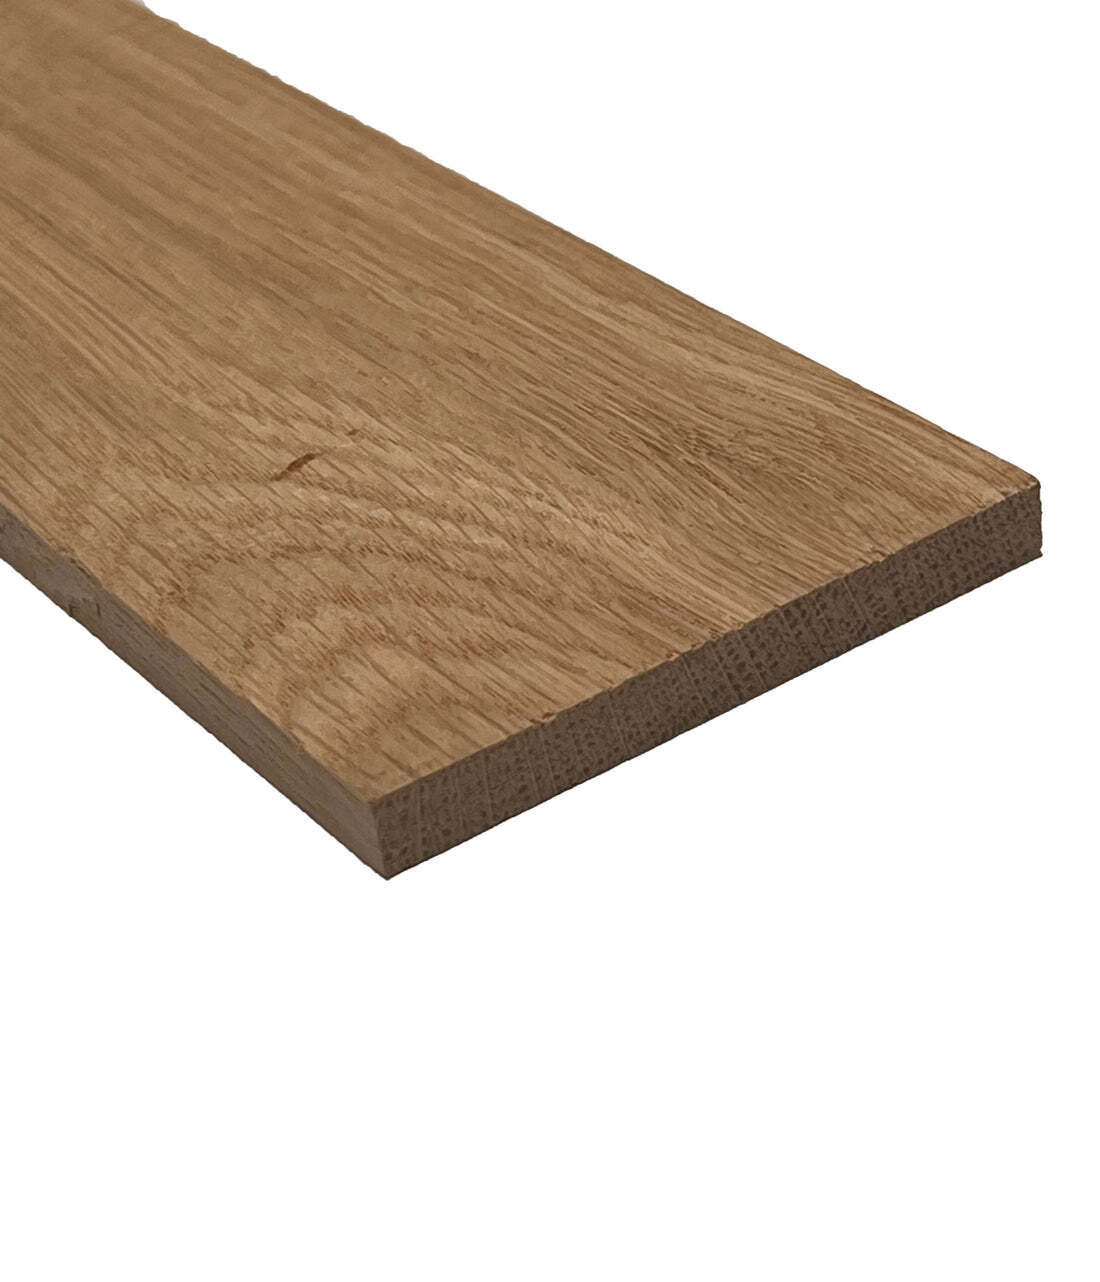 White Oak Thin Stock Three-Dimensional Lumber Board Wood Blank Kiln Dried